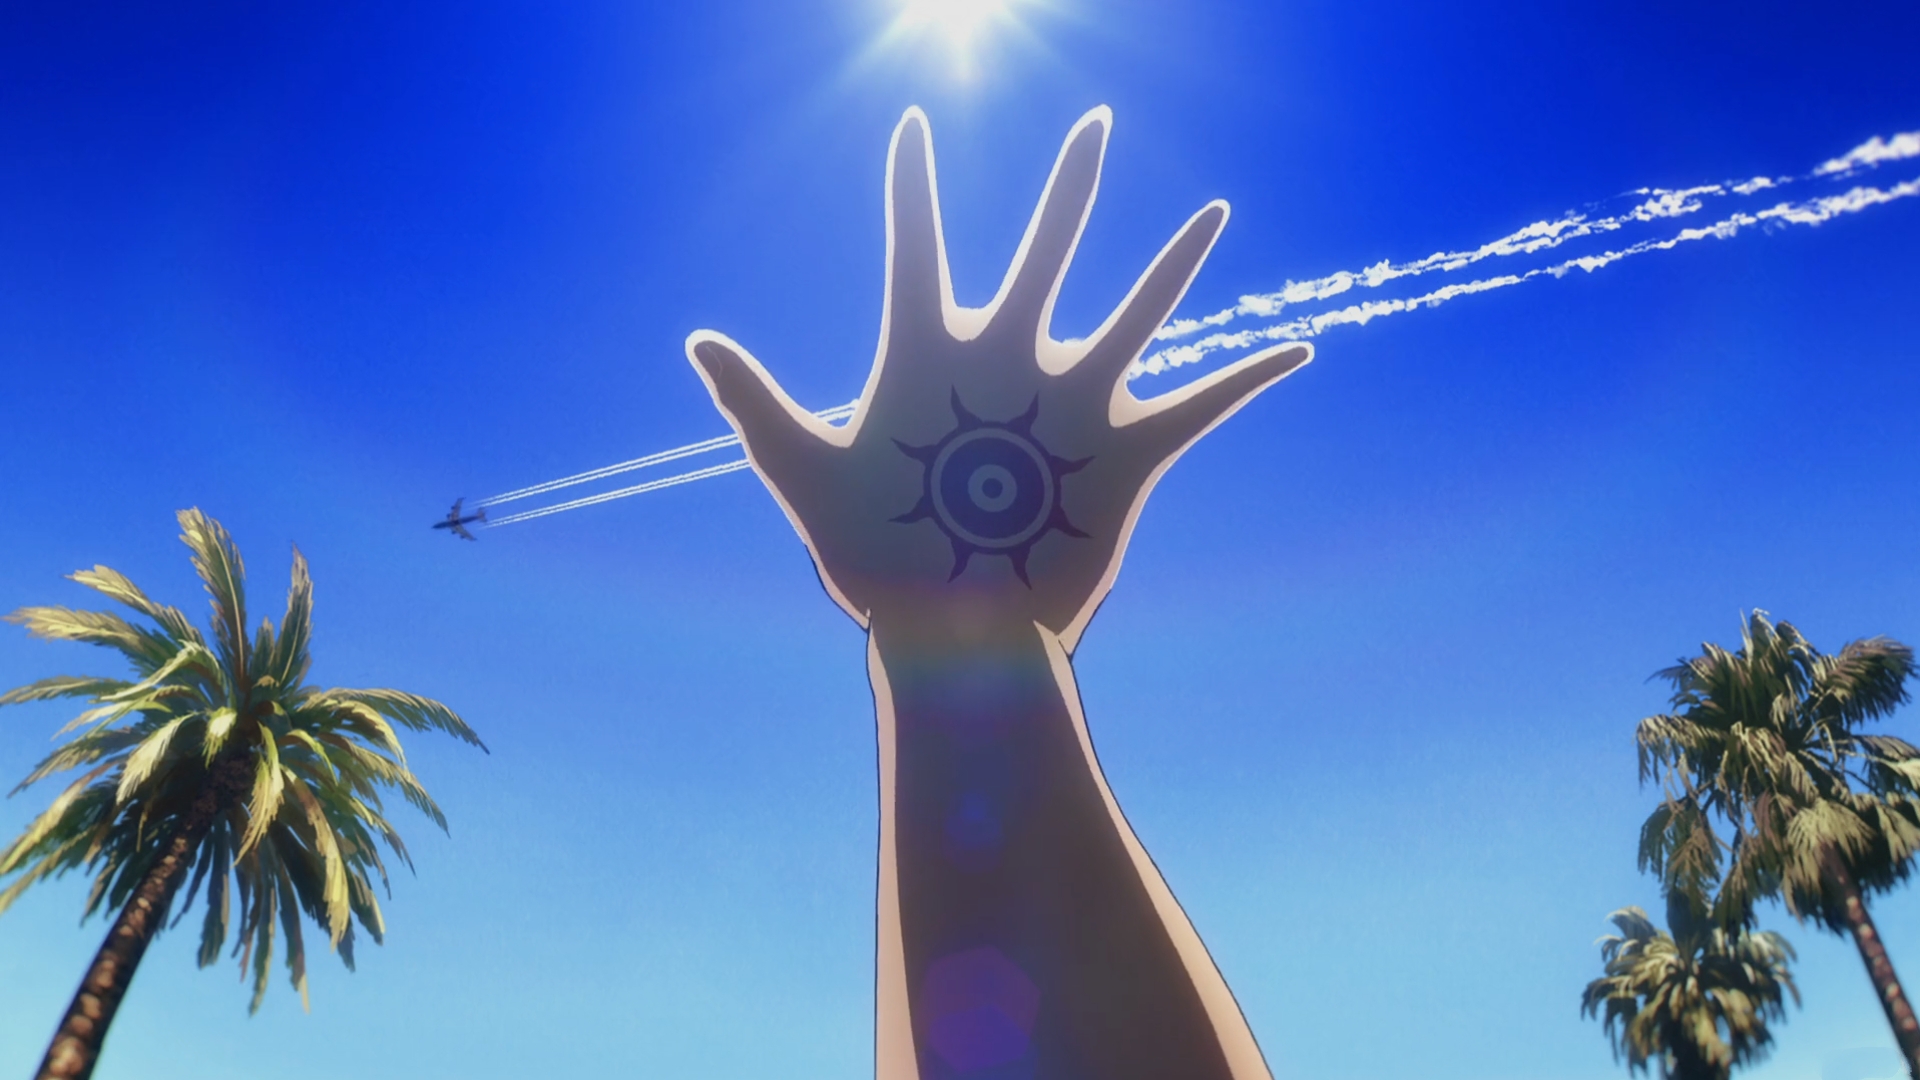 Fate Series Fate Strange Fake Sky Anime Anime Screenshot Palm Trees Tattoo Sun Sunlight Airplane Air 1920x1080